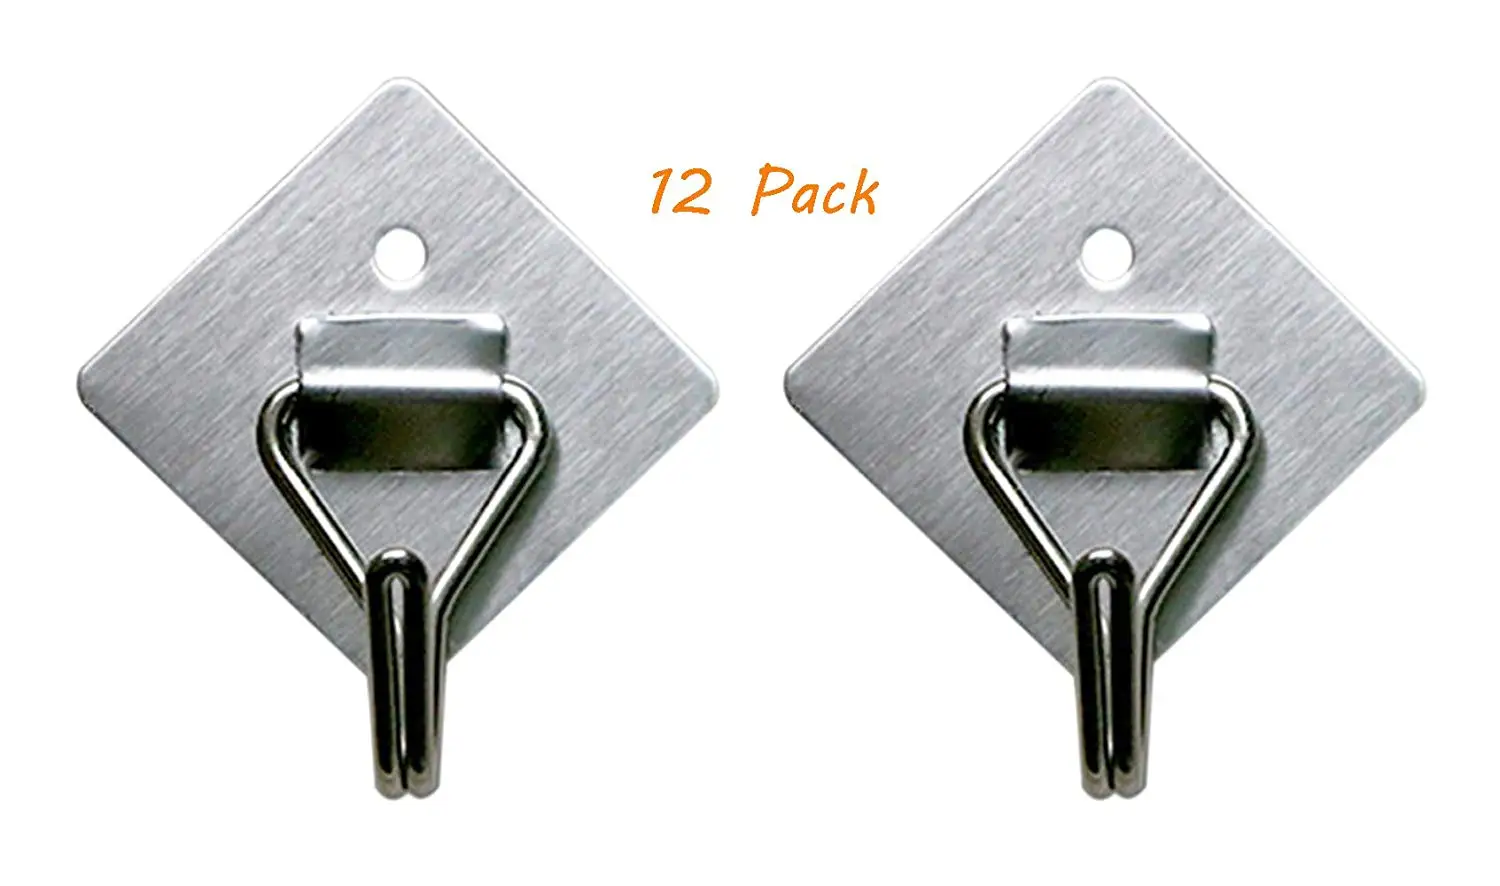 Buy Tsj Metal Adhesive Hooks Under Cabinet Screw Included